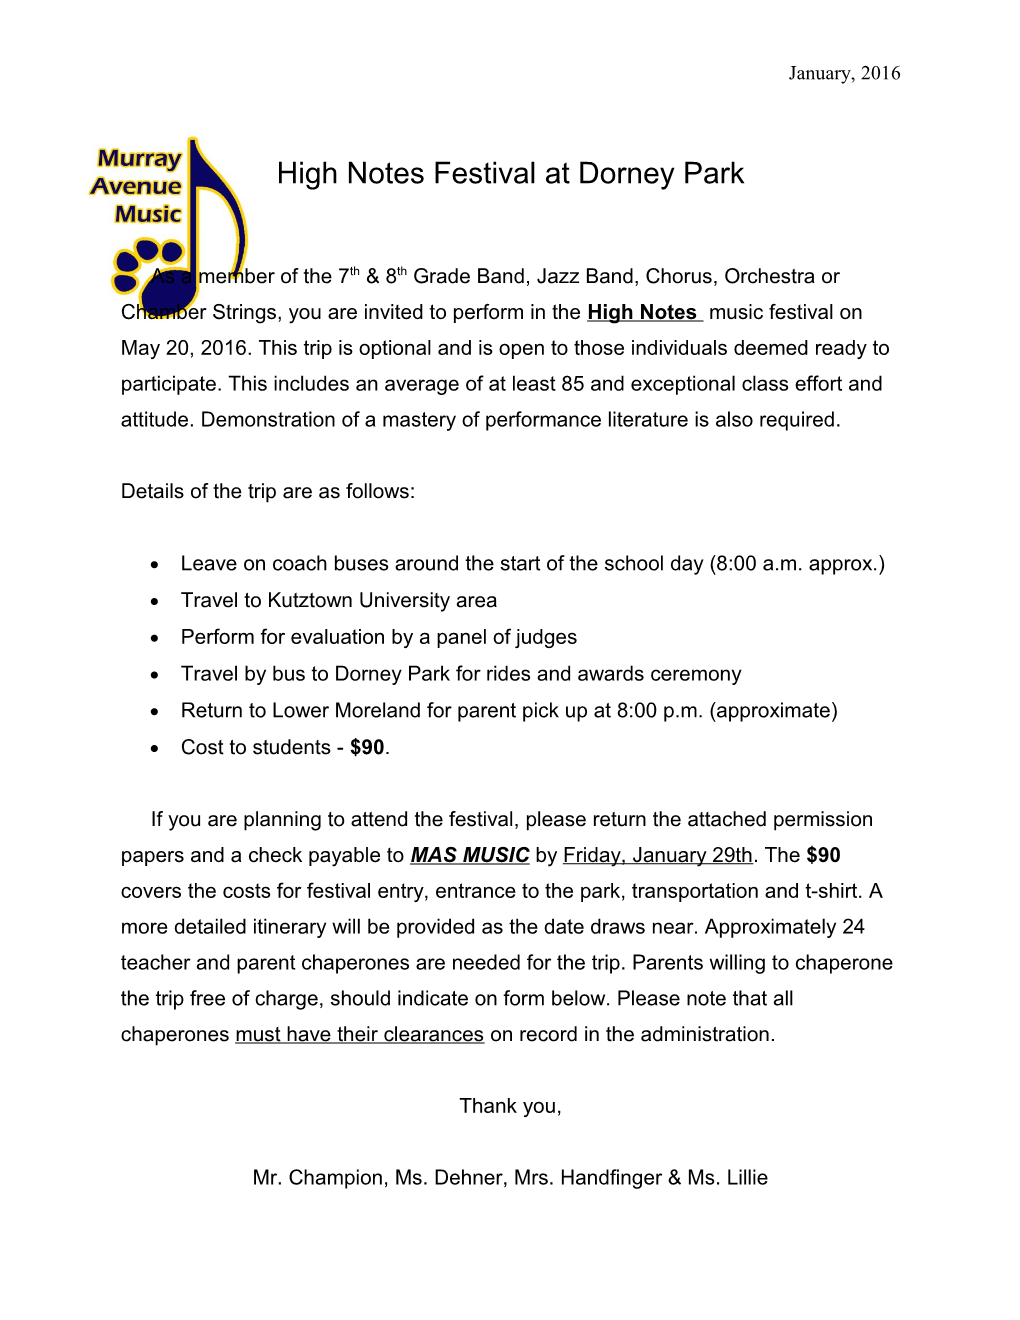 High Notes Festival at Dorney Park